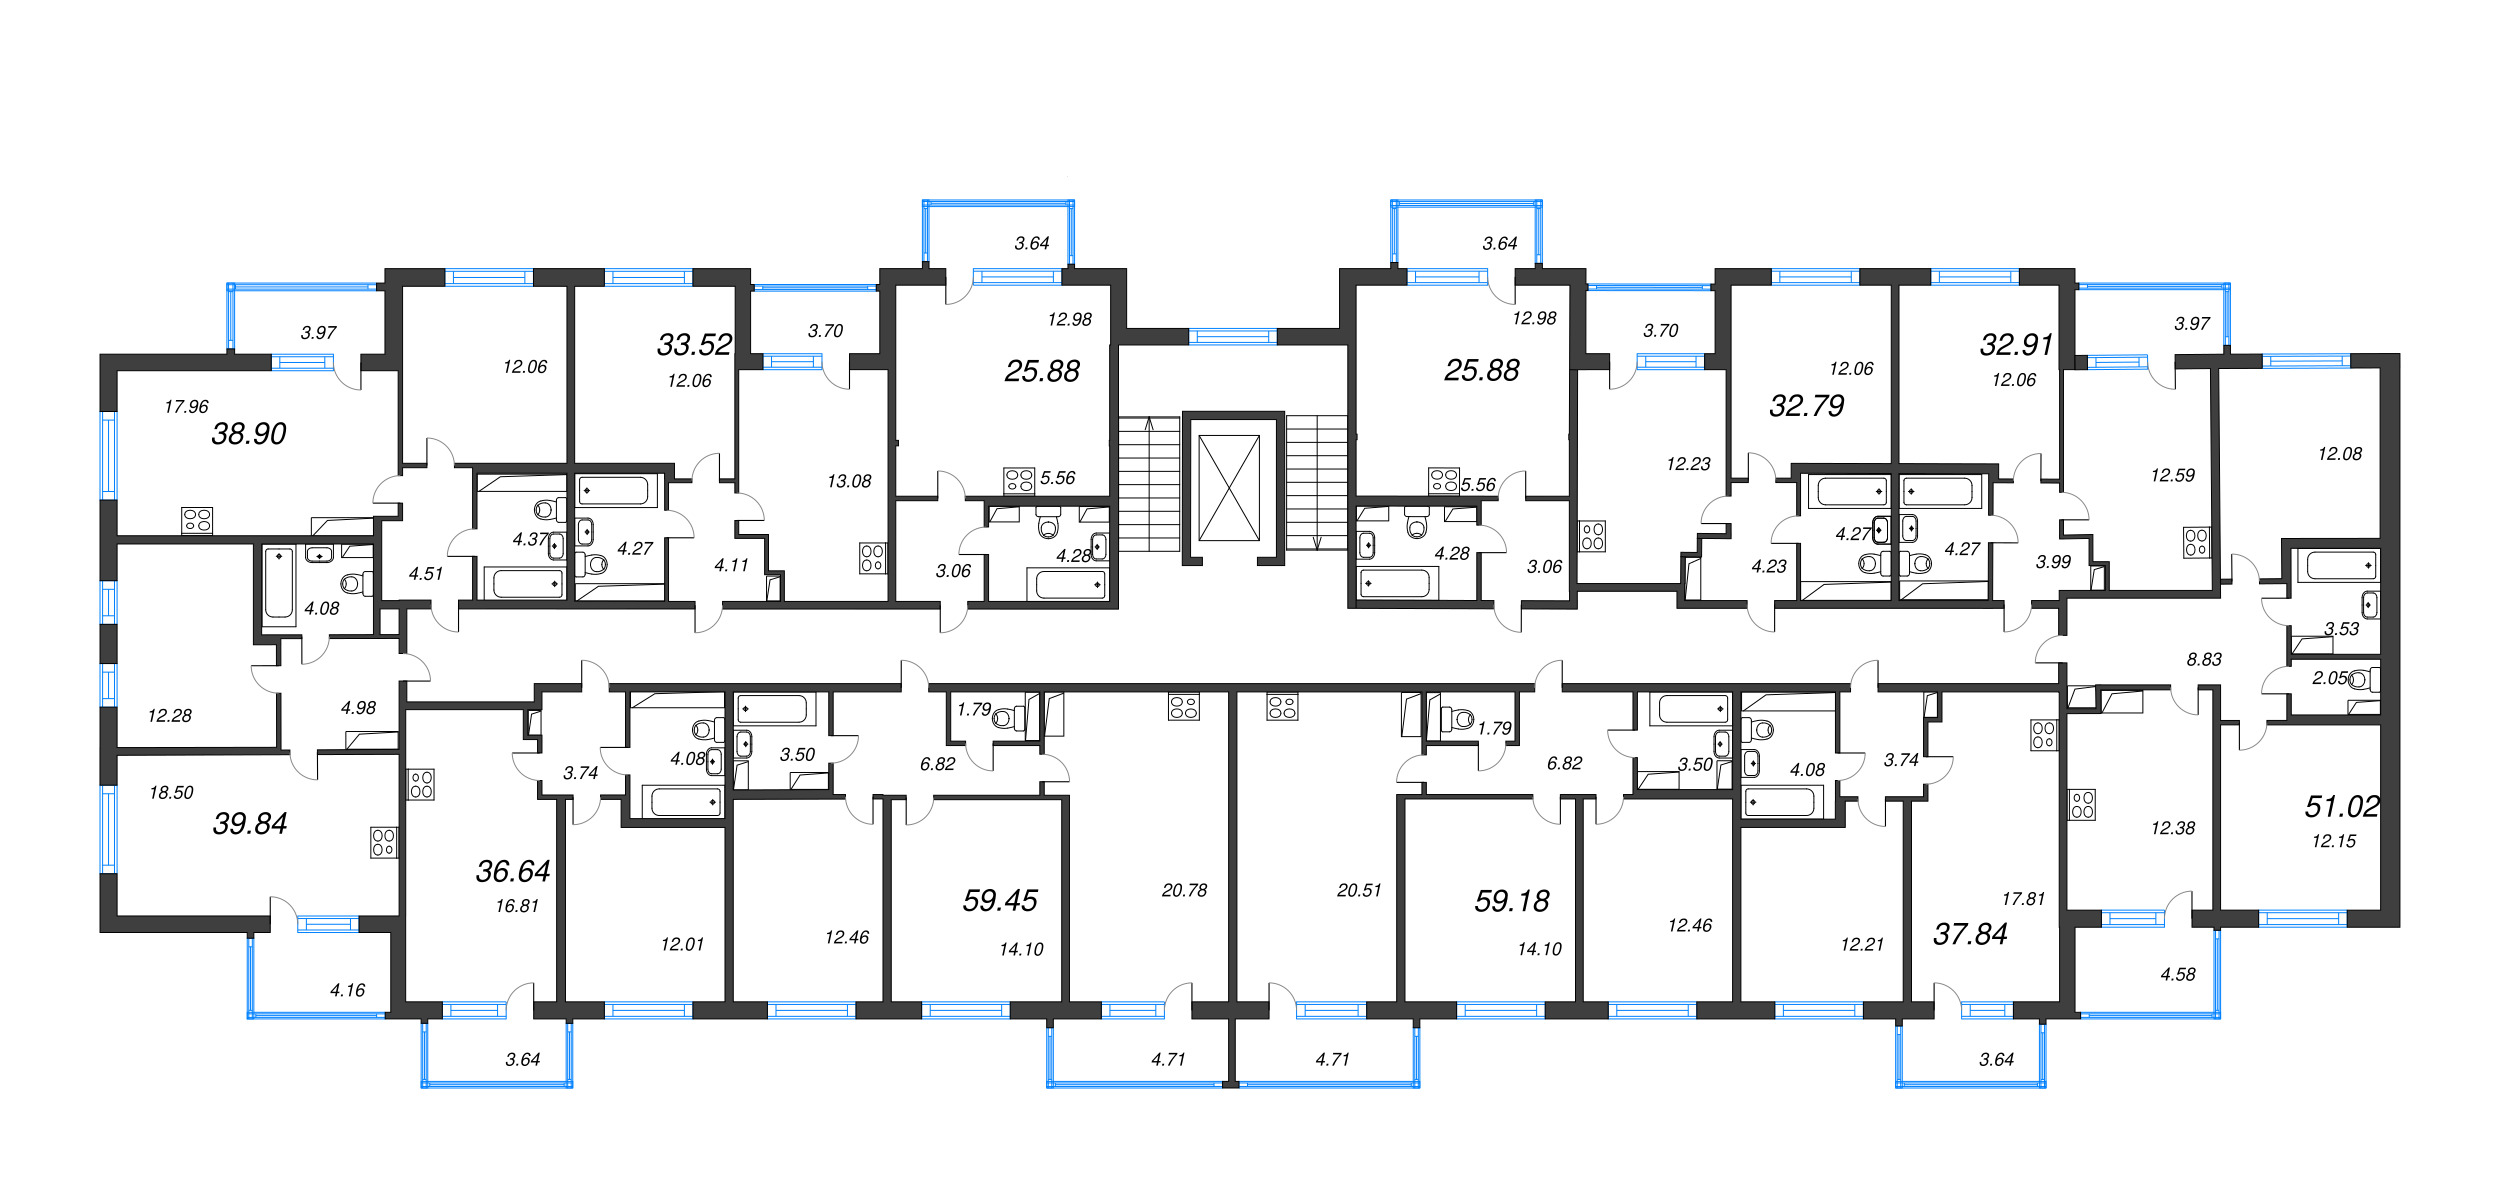 2-комнатная (Евро) квартира, 36.64 м² - планировка этажа